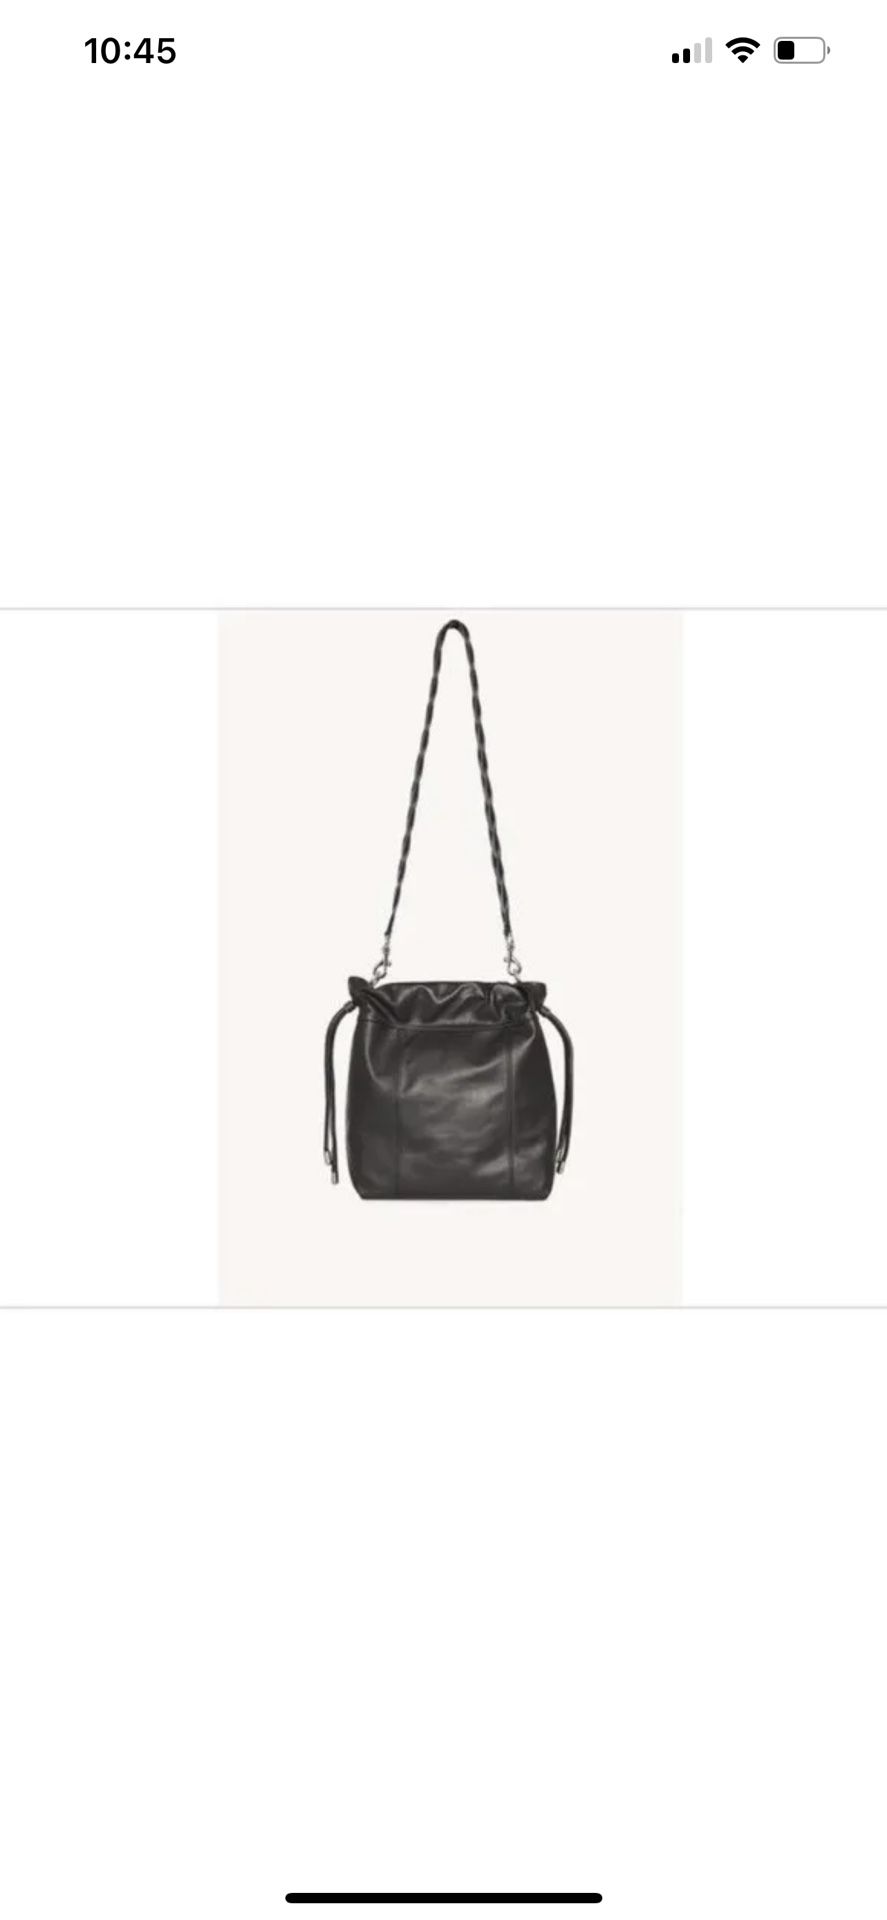 Rebecca Minkoff Alex Slouchy Shoulder Bag in Black Leather NWT